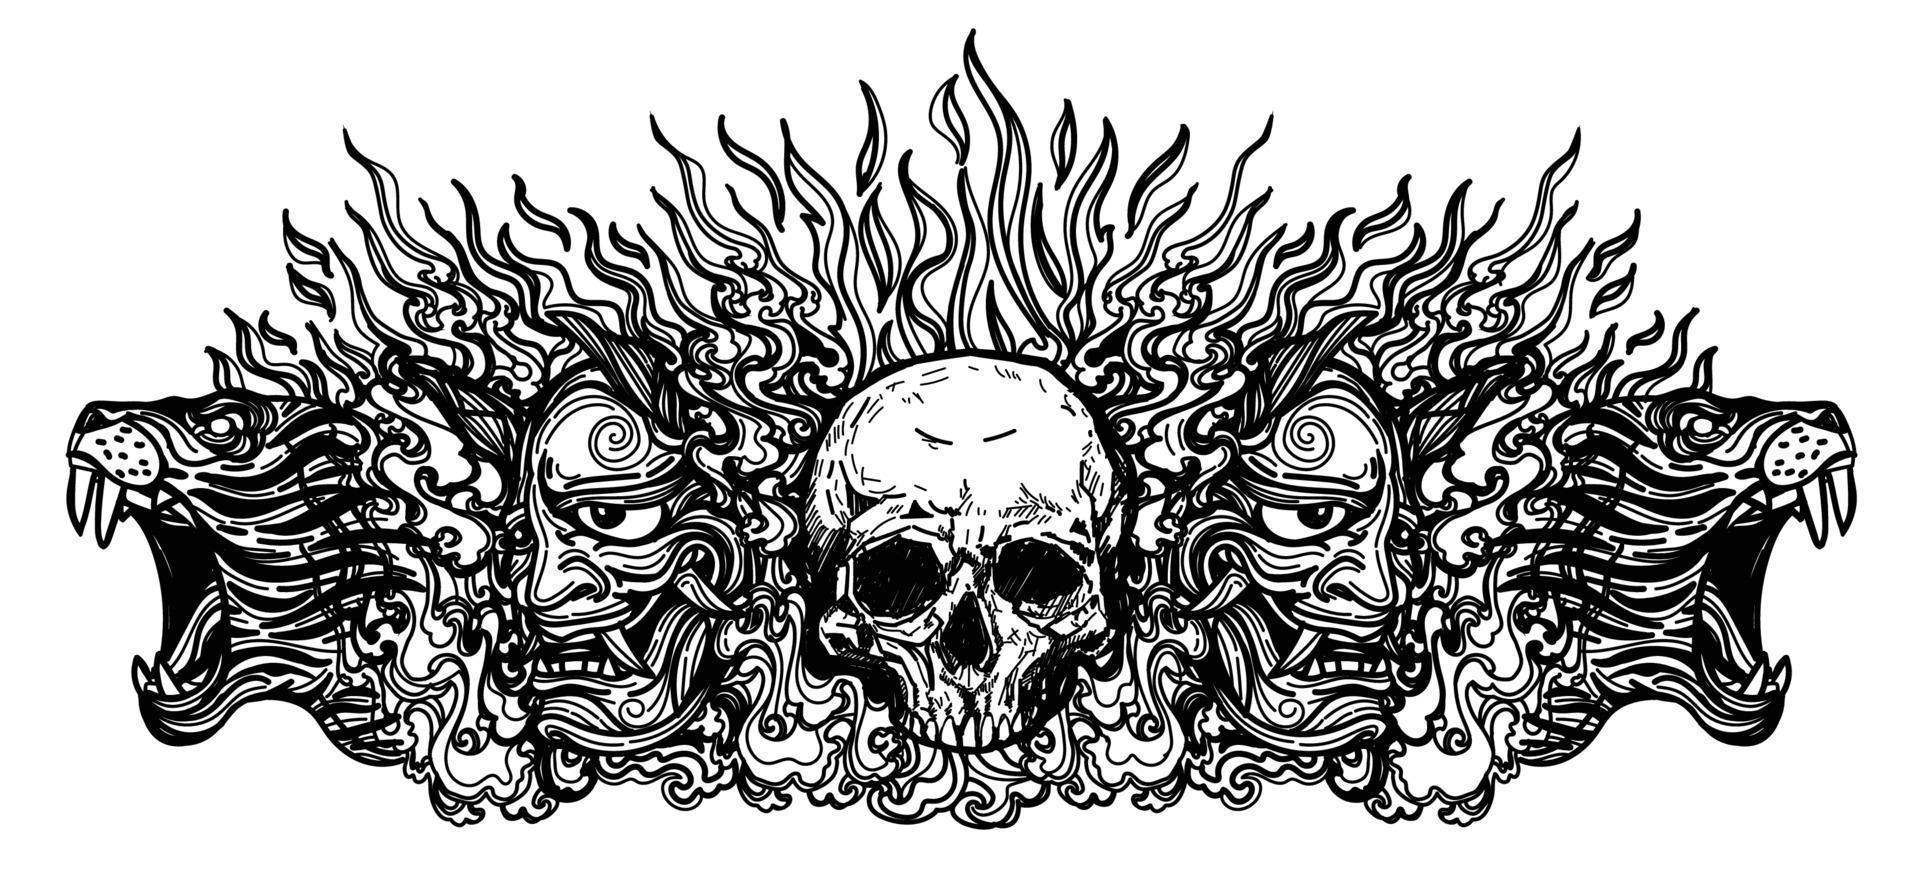 tattoo art schedel duivel masker en tijger tekening schets zwart wit vector